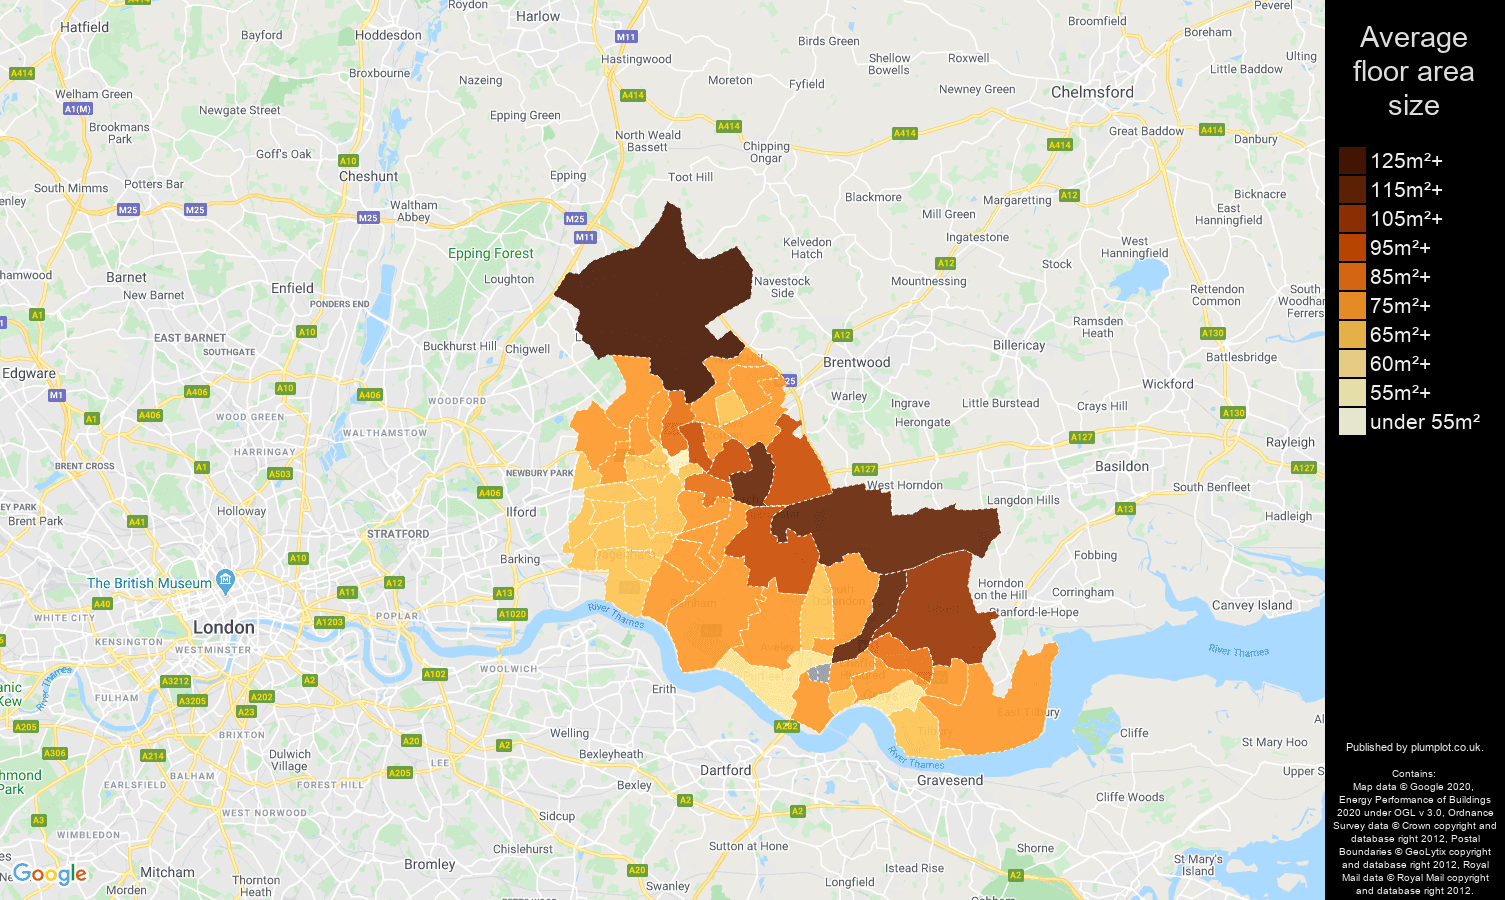 Romford map of average floor area size of properties